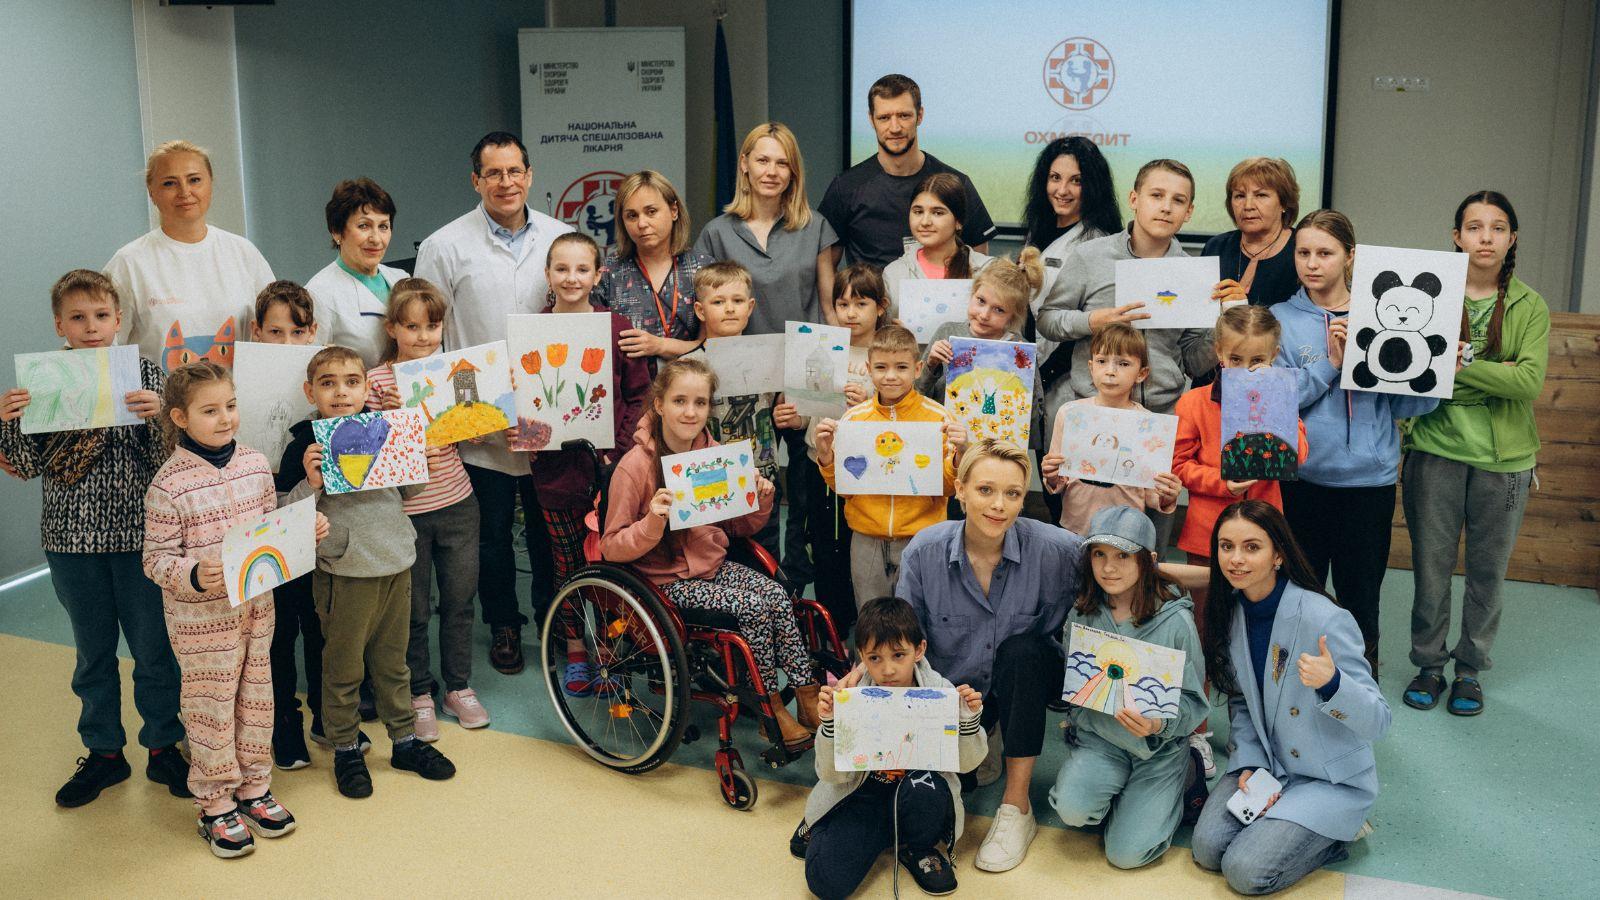 Ivanna Sakhno visited the injured children today